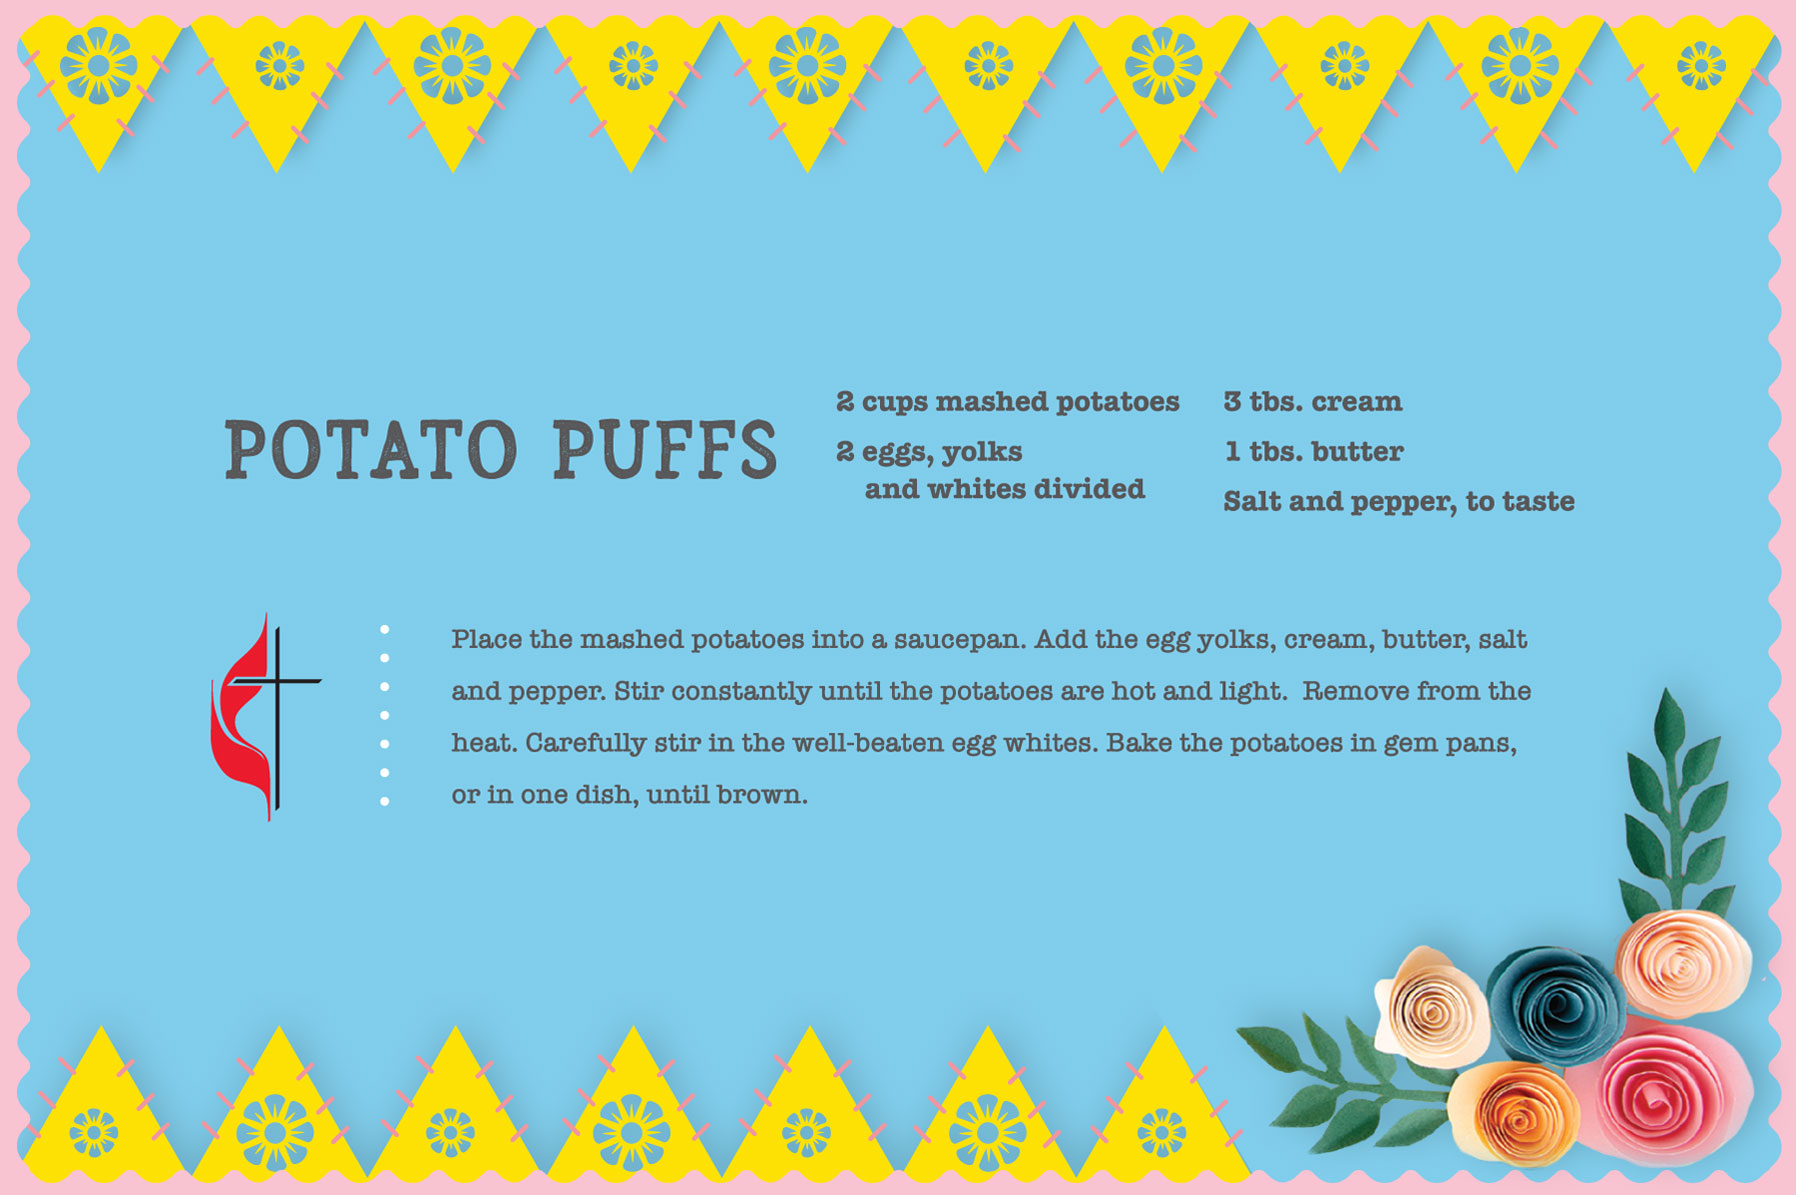 Vintage potato puffs recipe for Easter. Design by Sara Schork, United Methodist Communications